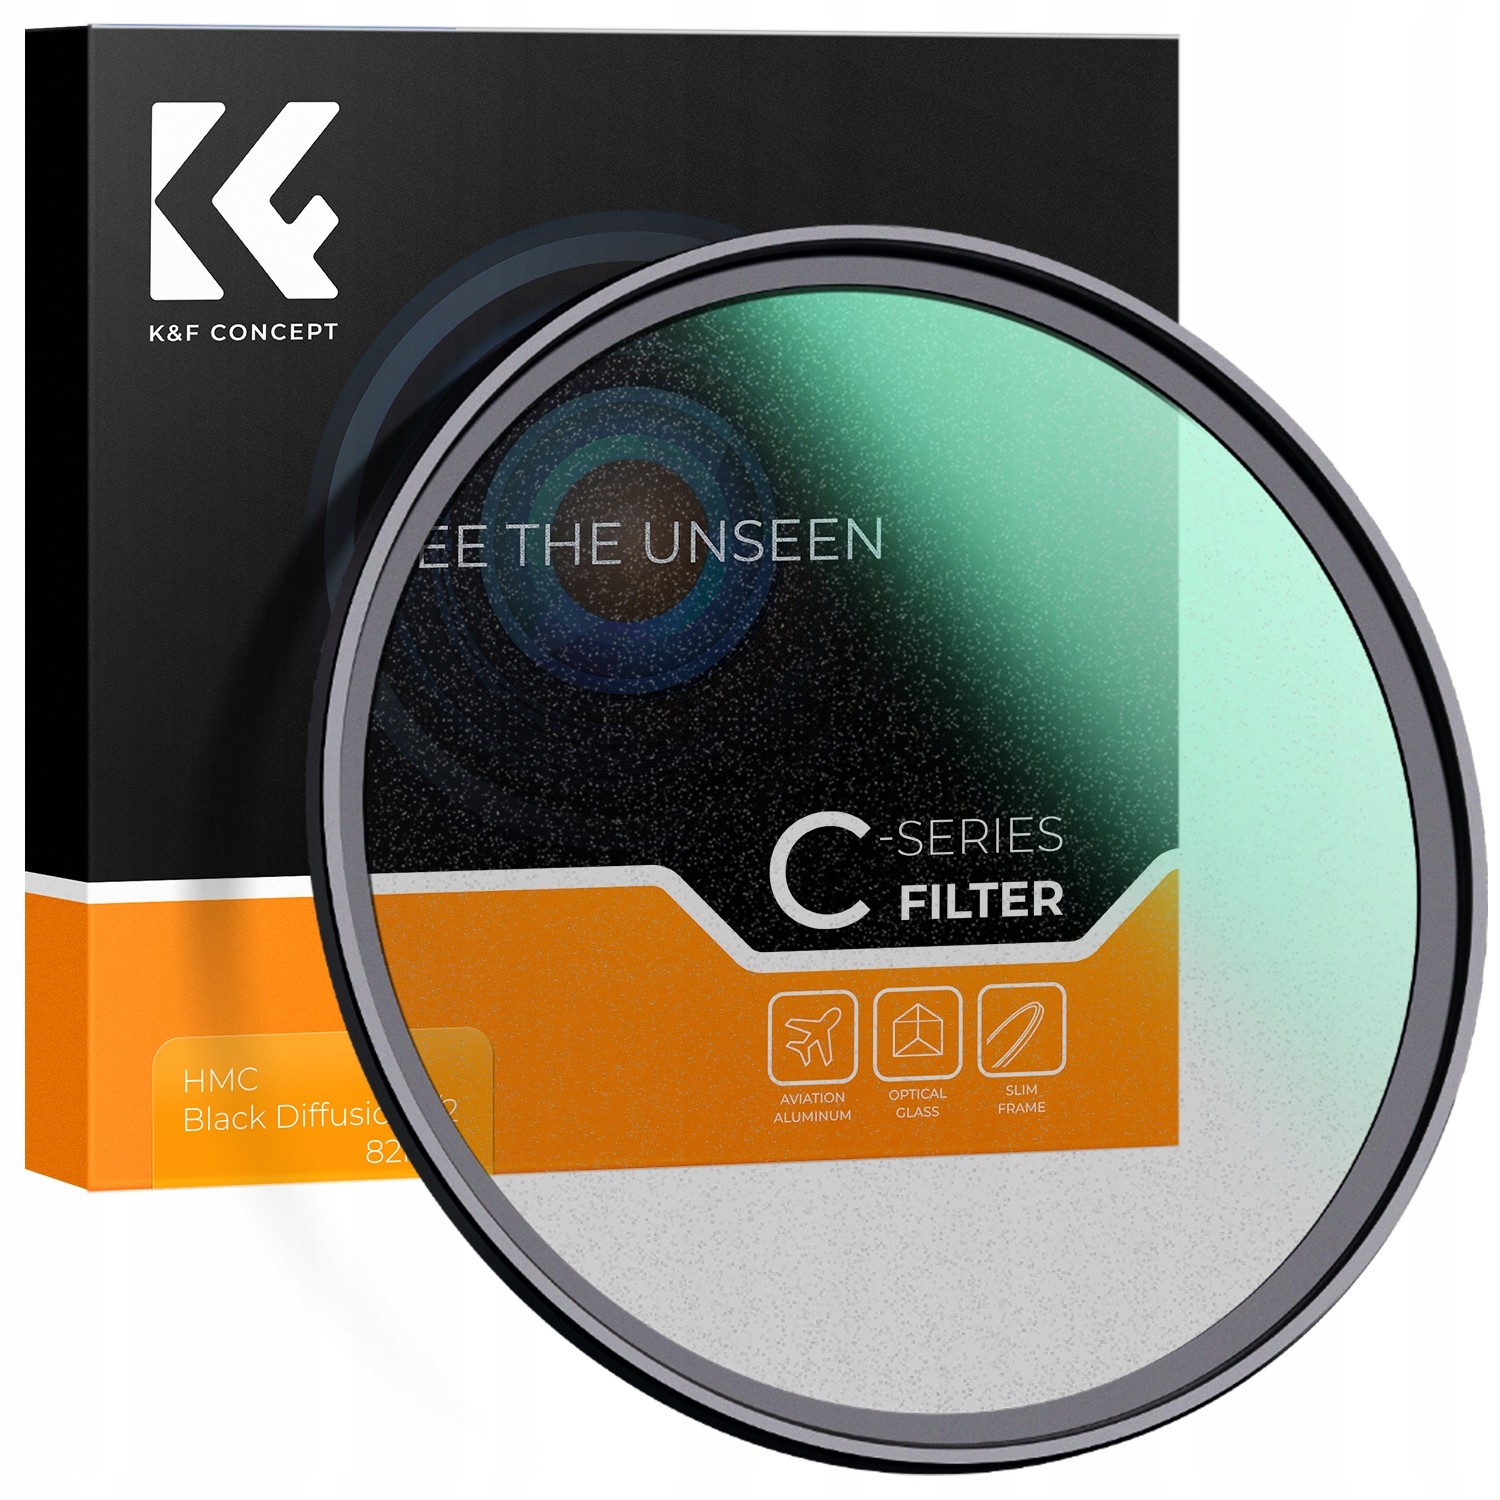 Difuzní filtr Black Mist 1/2 55mm Nano-C K&f